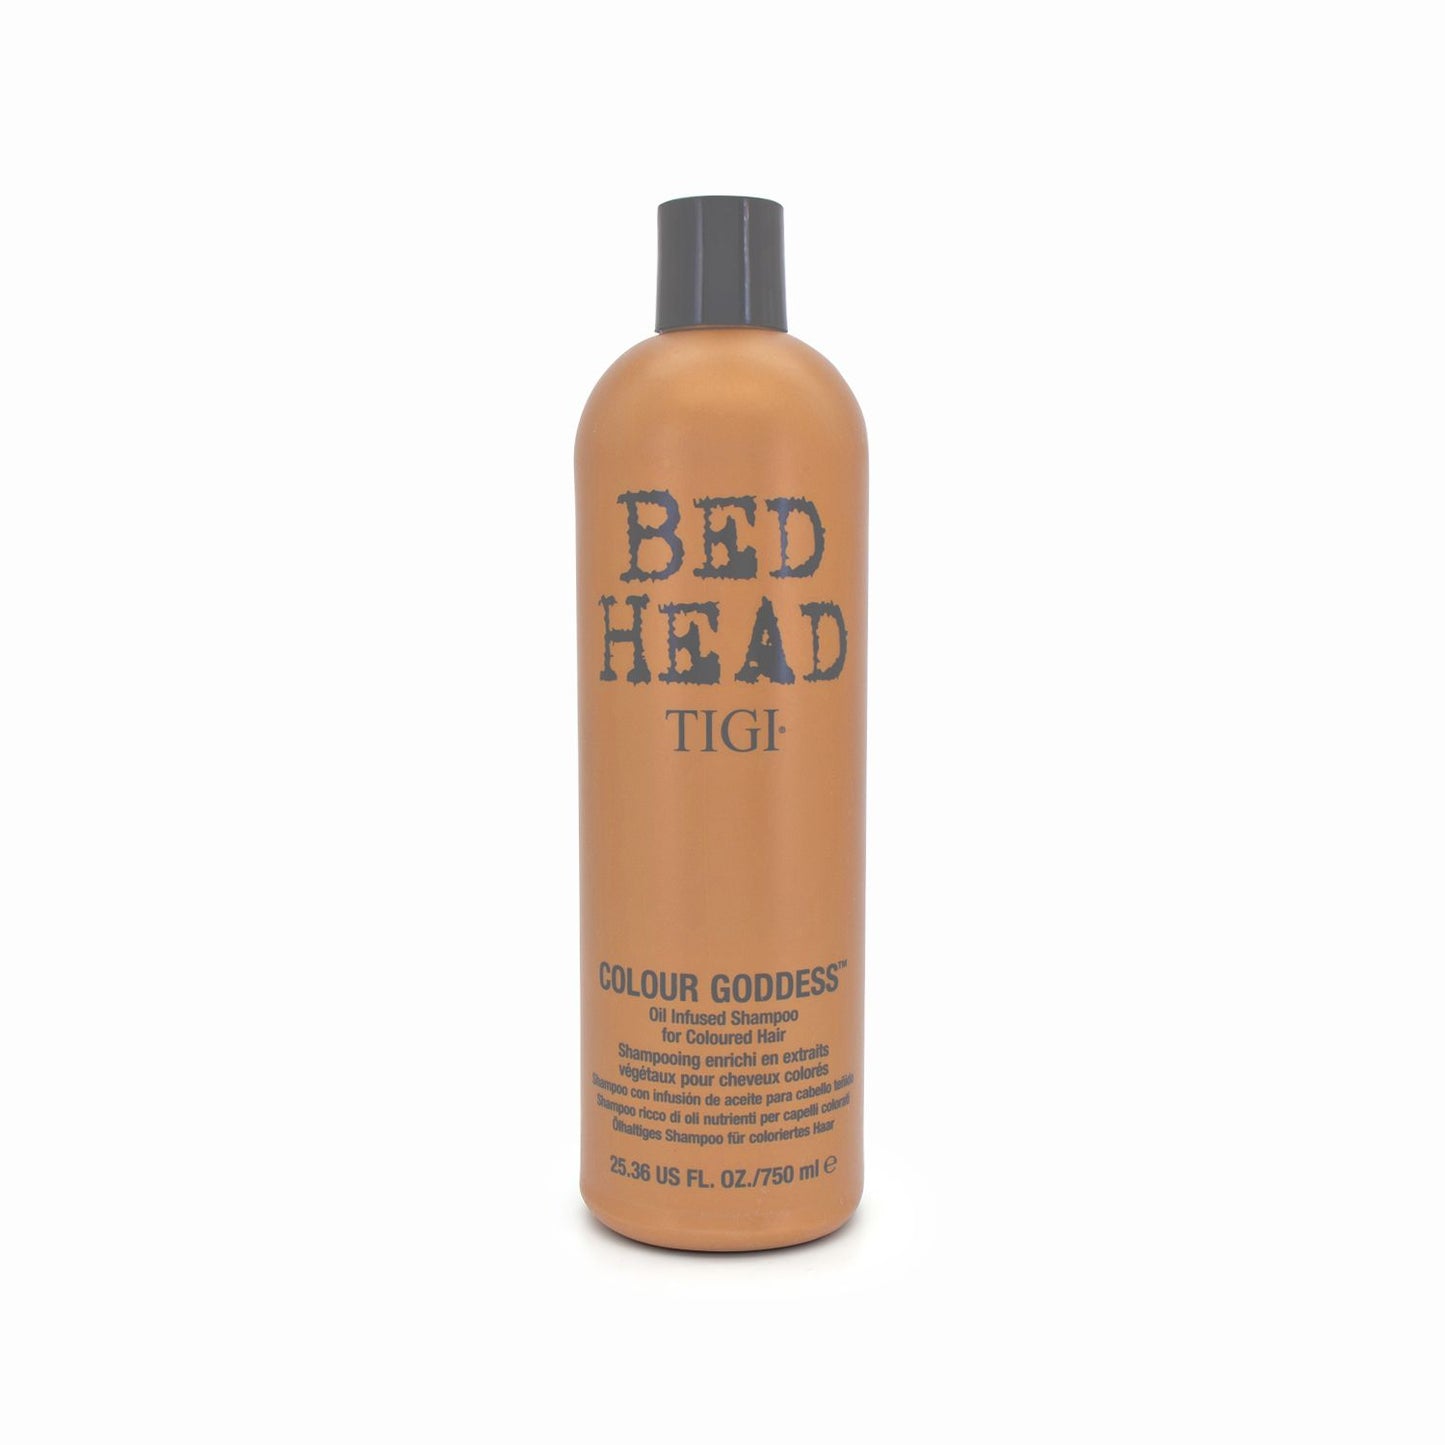 TIGI Bed Head Colour Goddess Oil Infused Shampoo 750ml - Imperfect Container